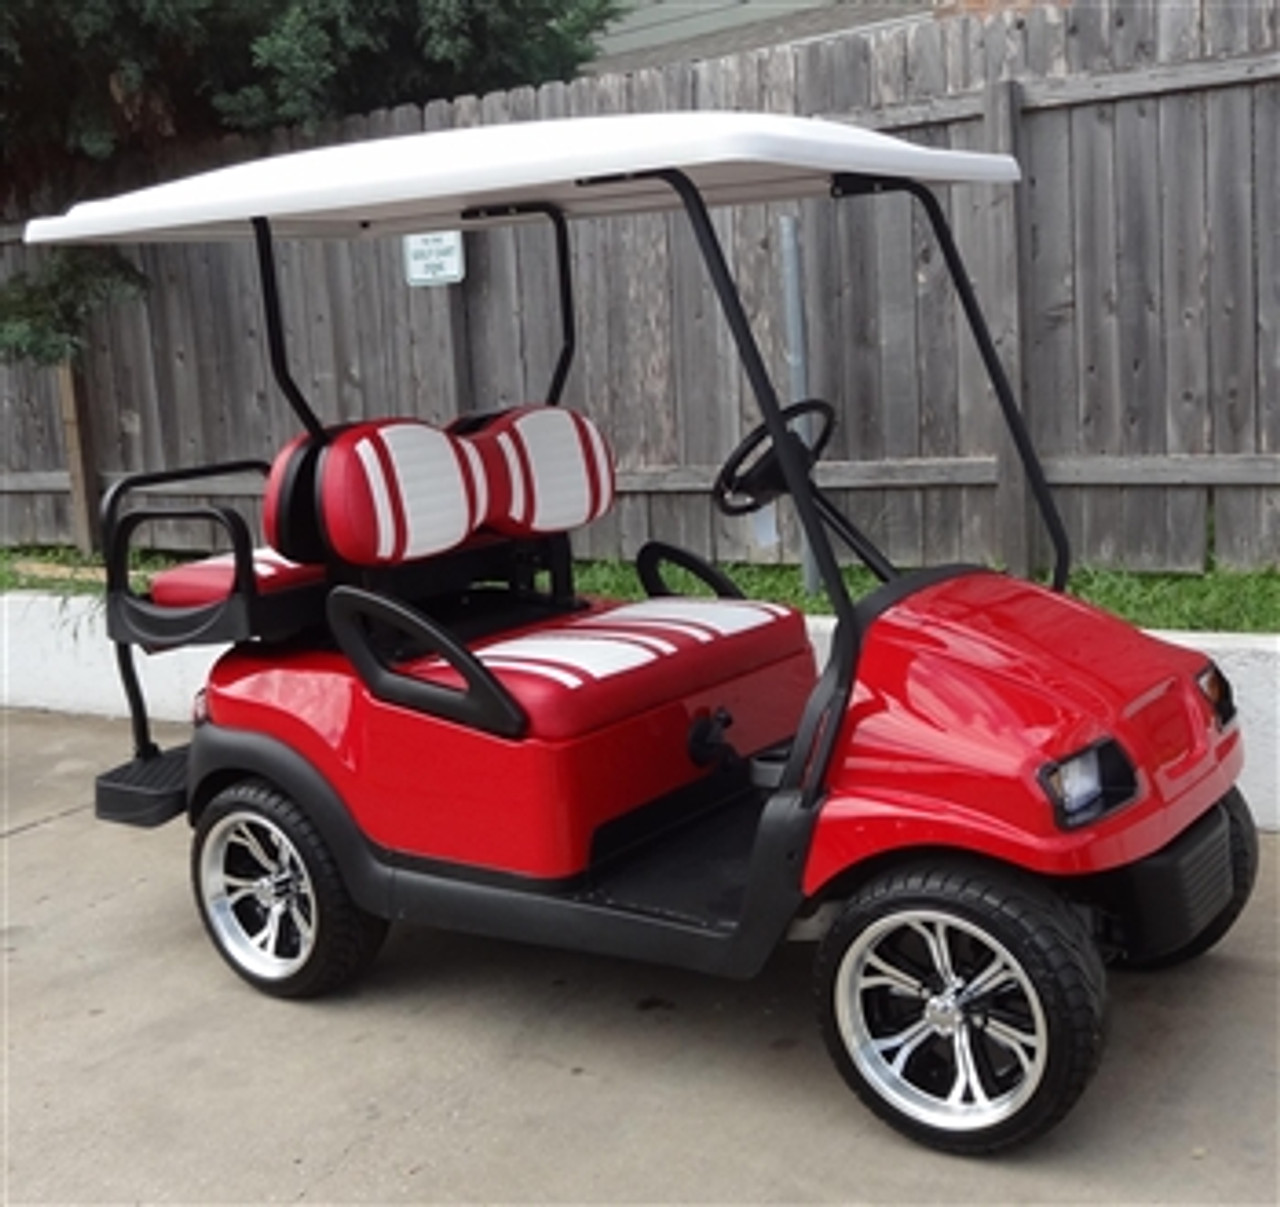 Club Car DS Golf Cart Spartan Body Kit by DoubleTake